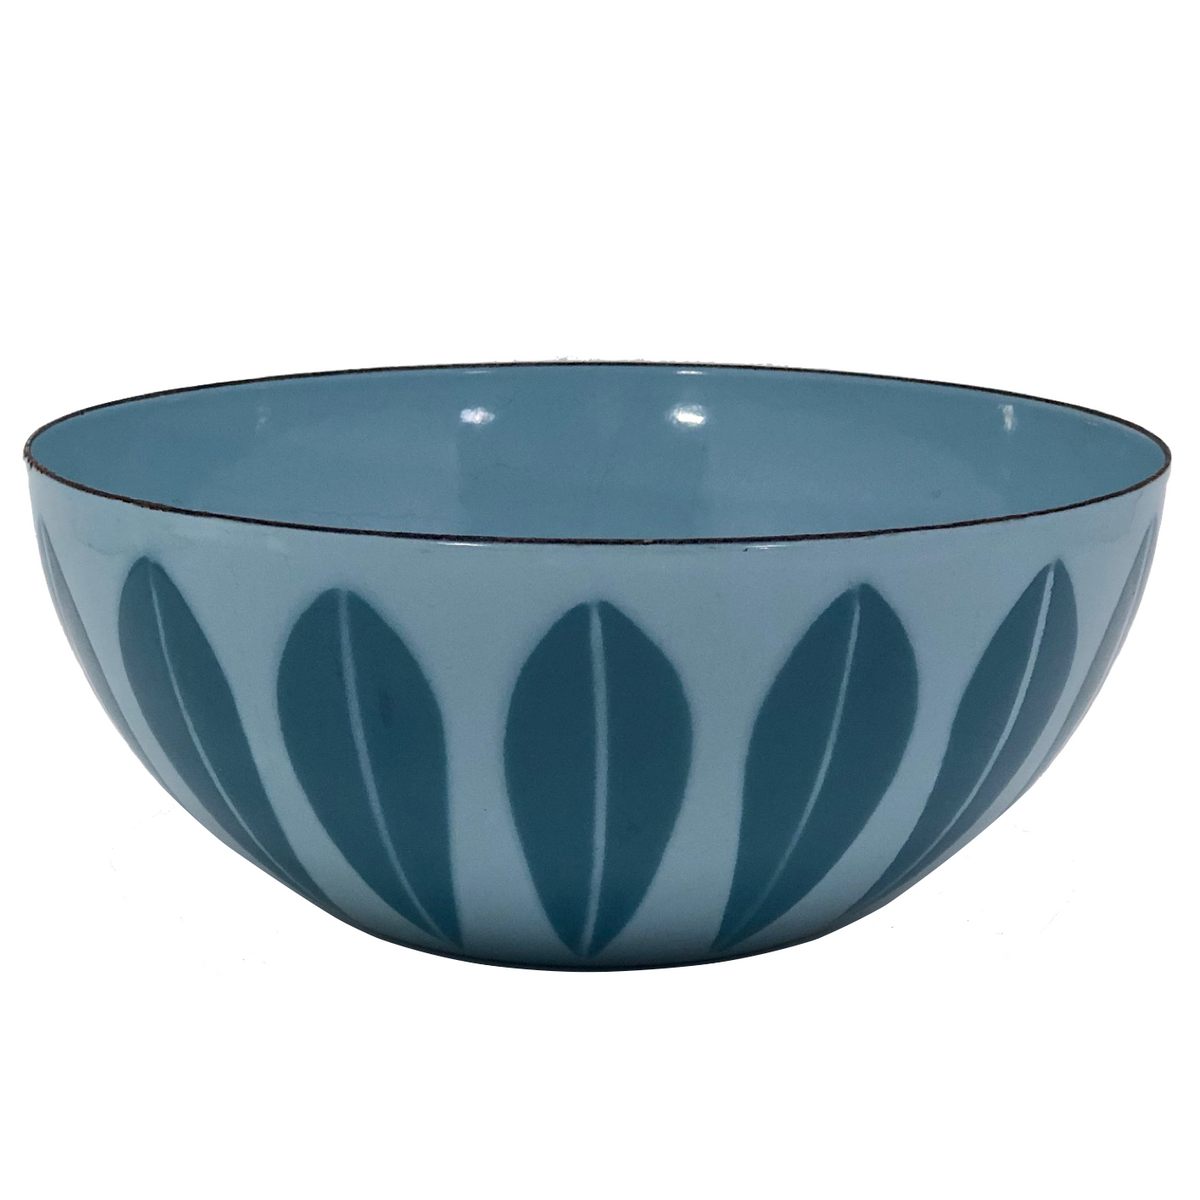 Catherineholm Blue on Blue 8 Inch Enamelware Lotus Bowl – critical